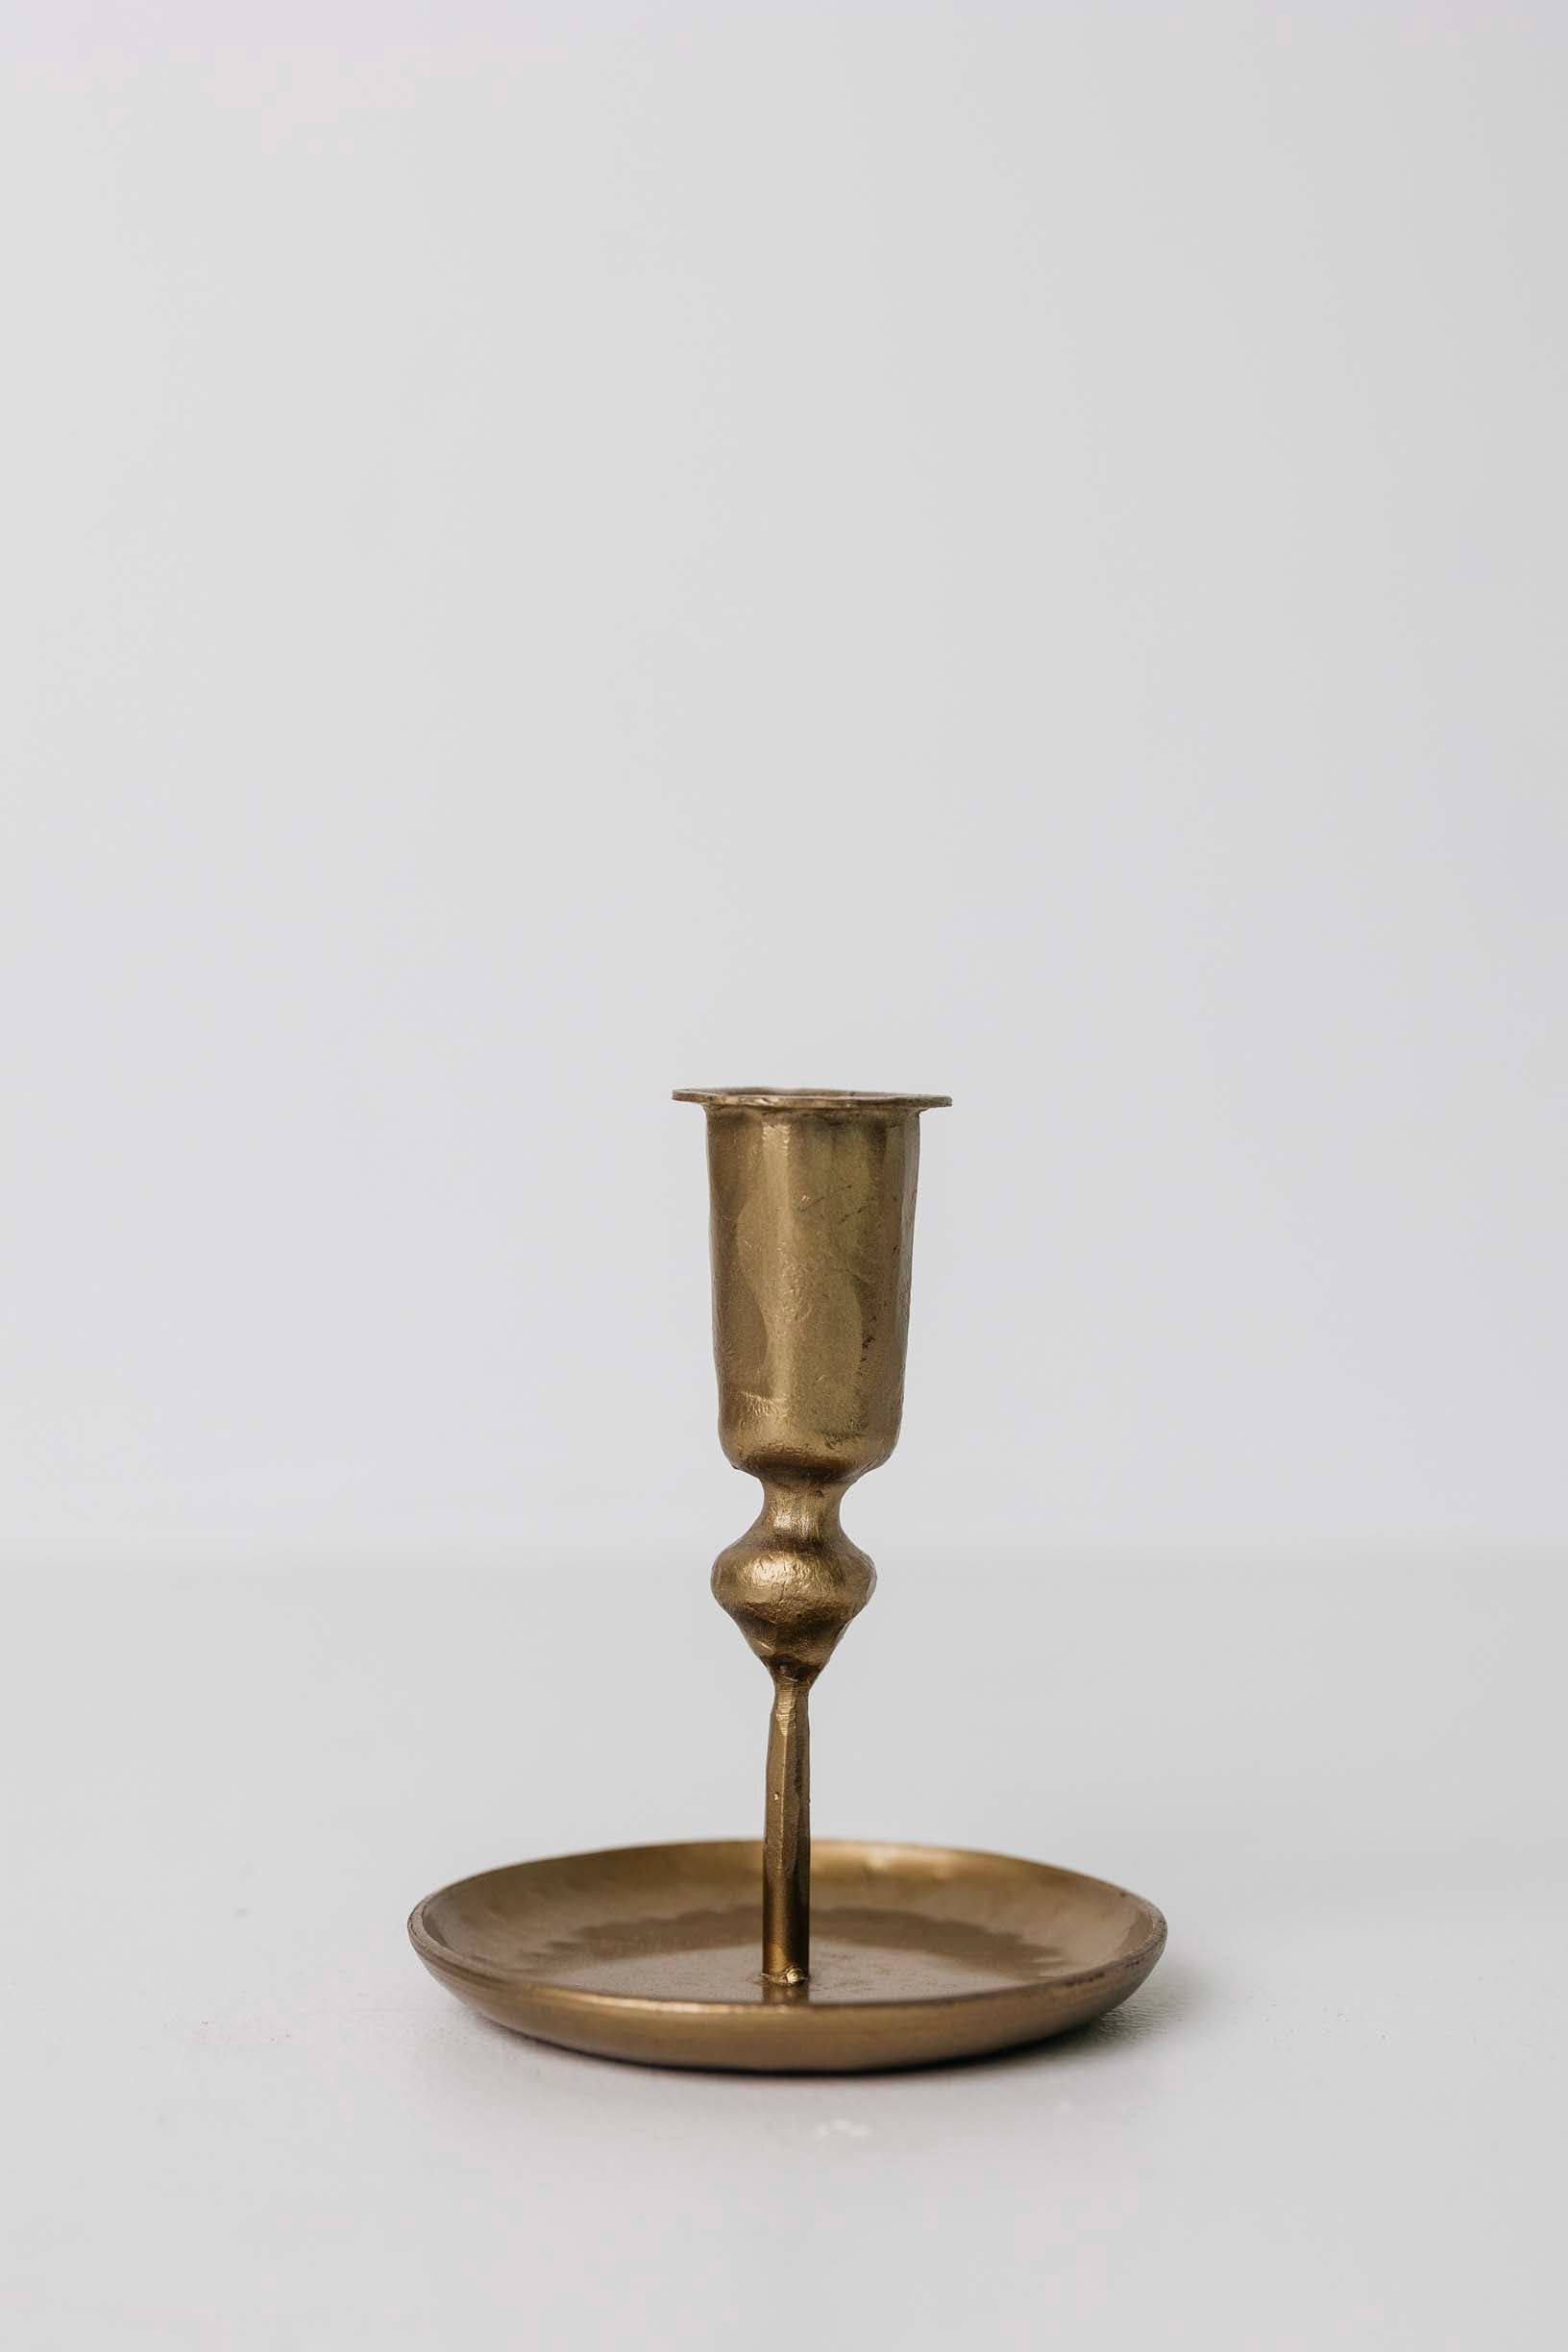 Brass Candle Holder Vintage Chamberstick Finger Ring Candlesticks